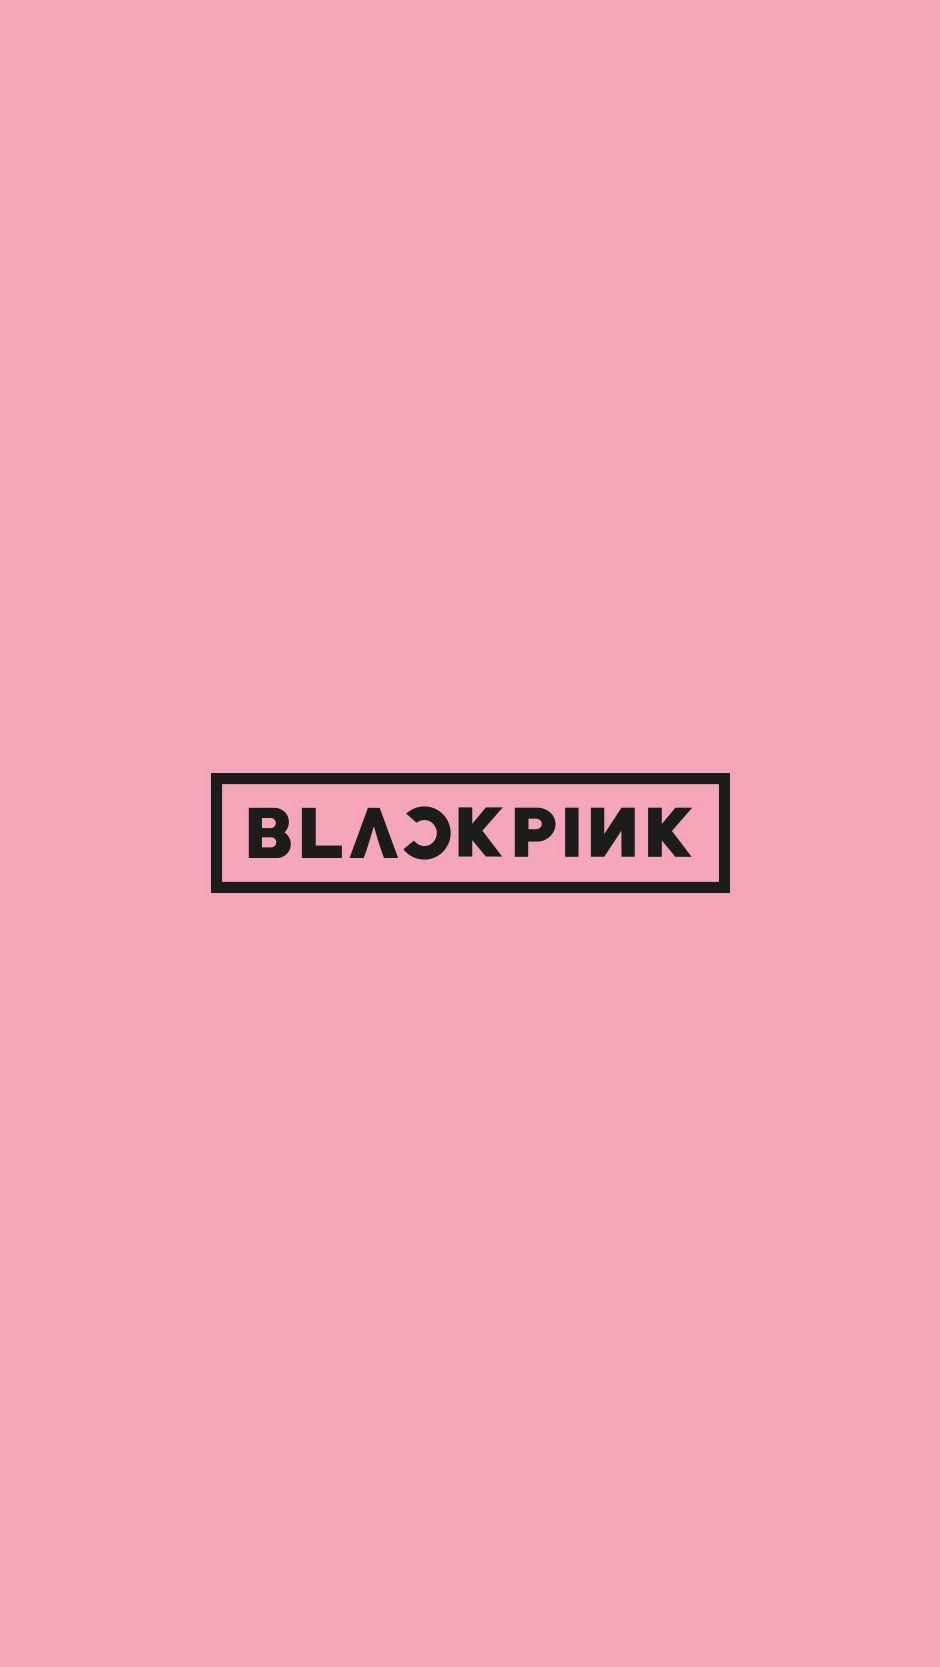 Logo blackpink đẹp